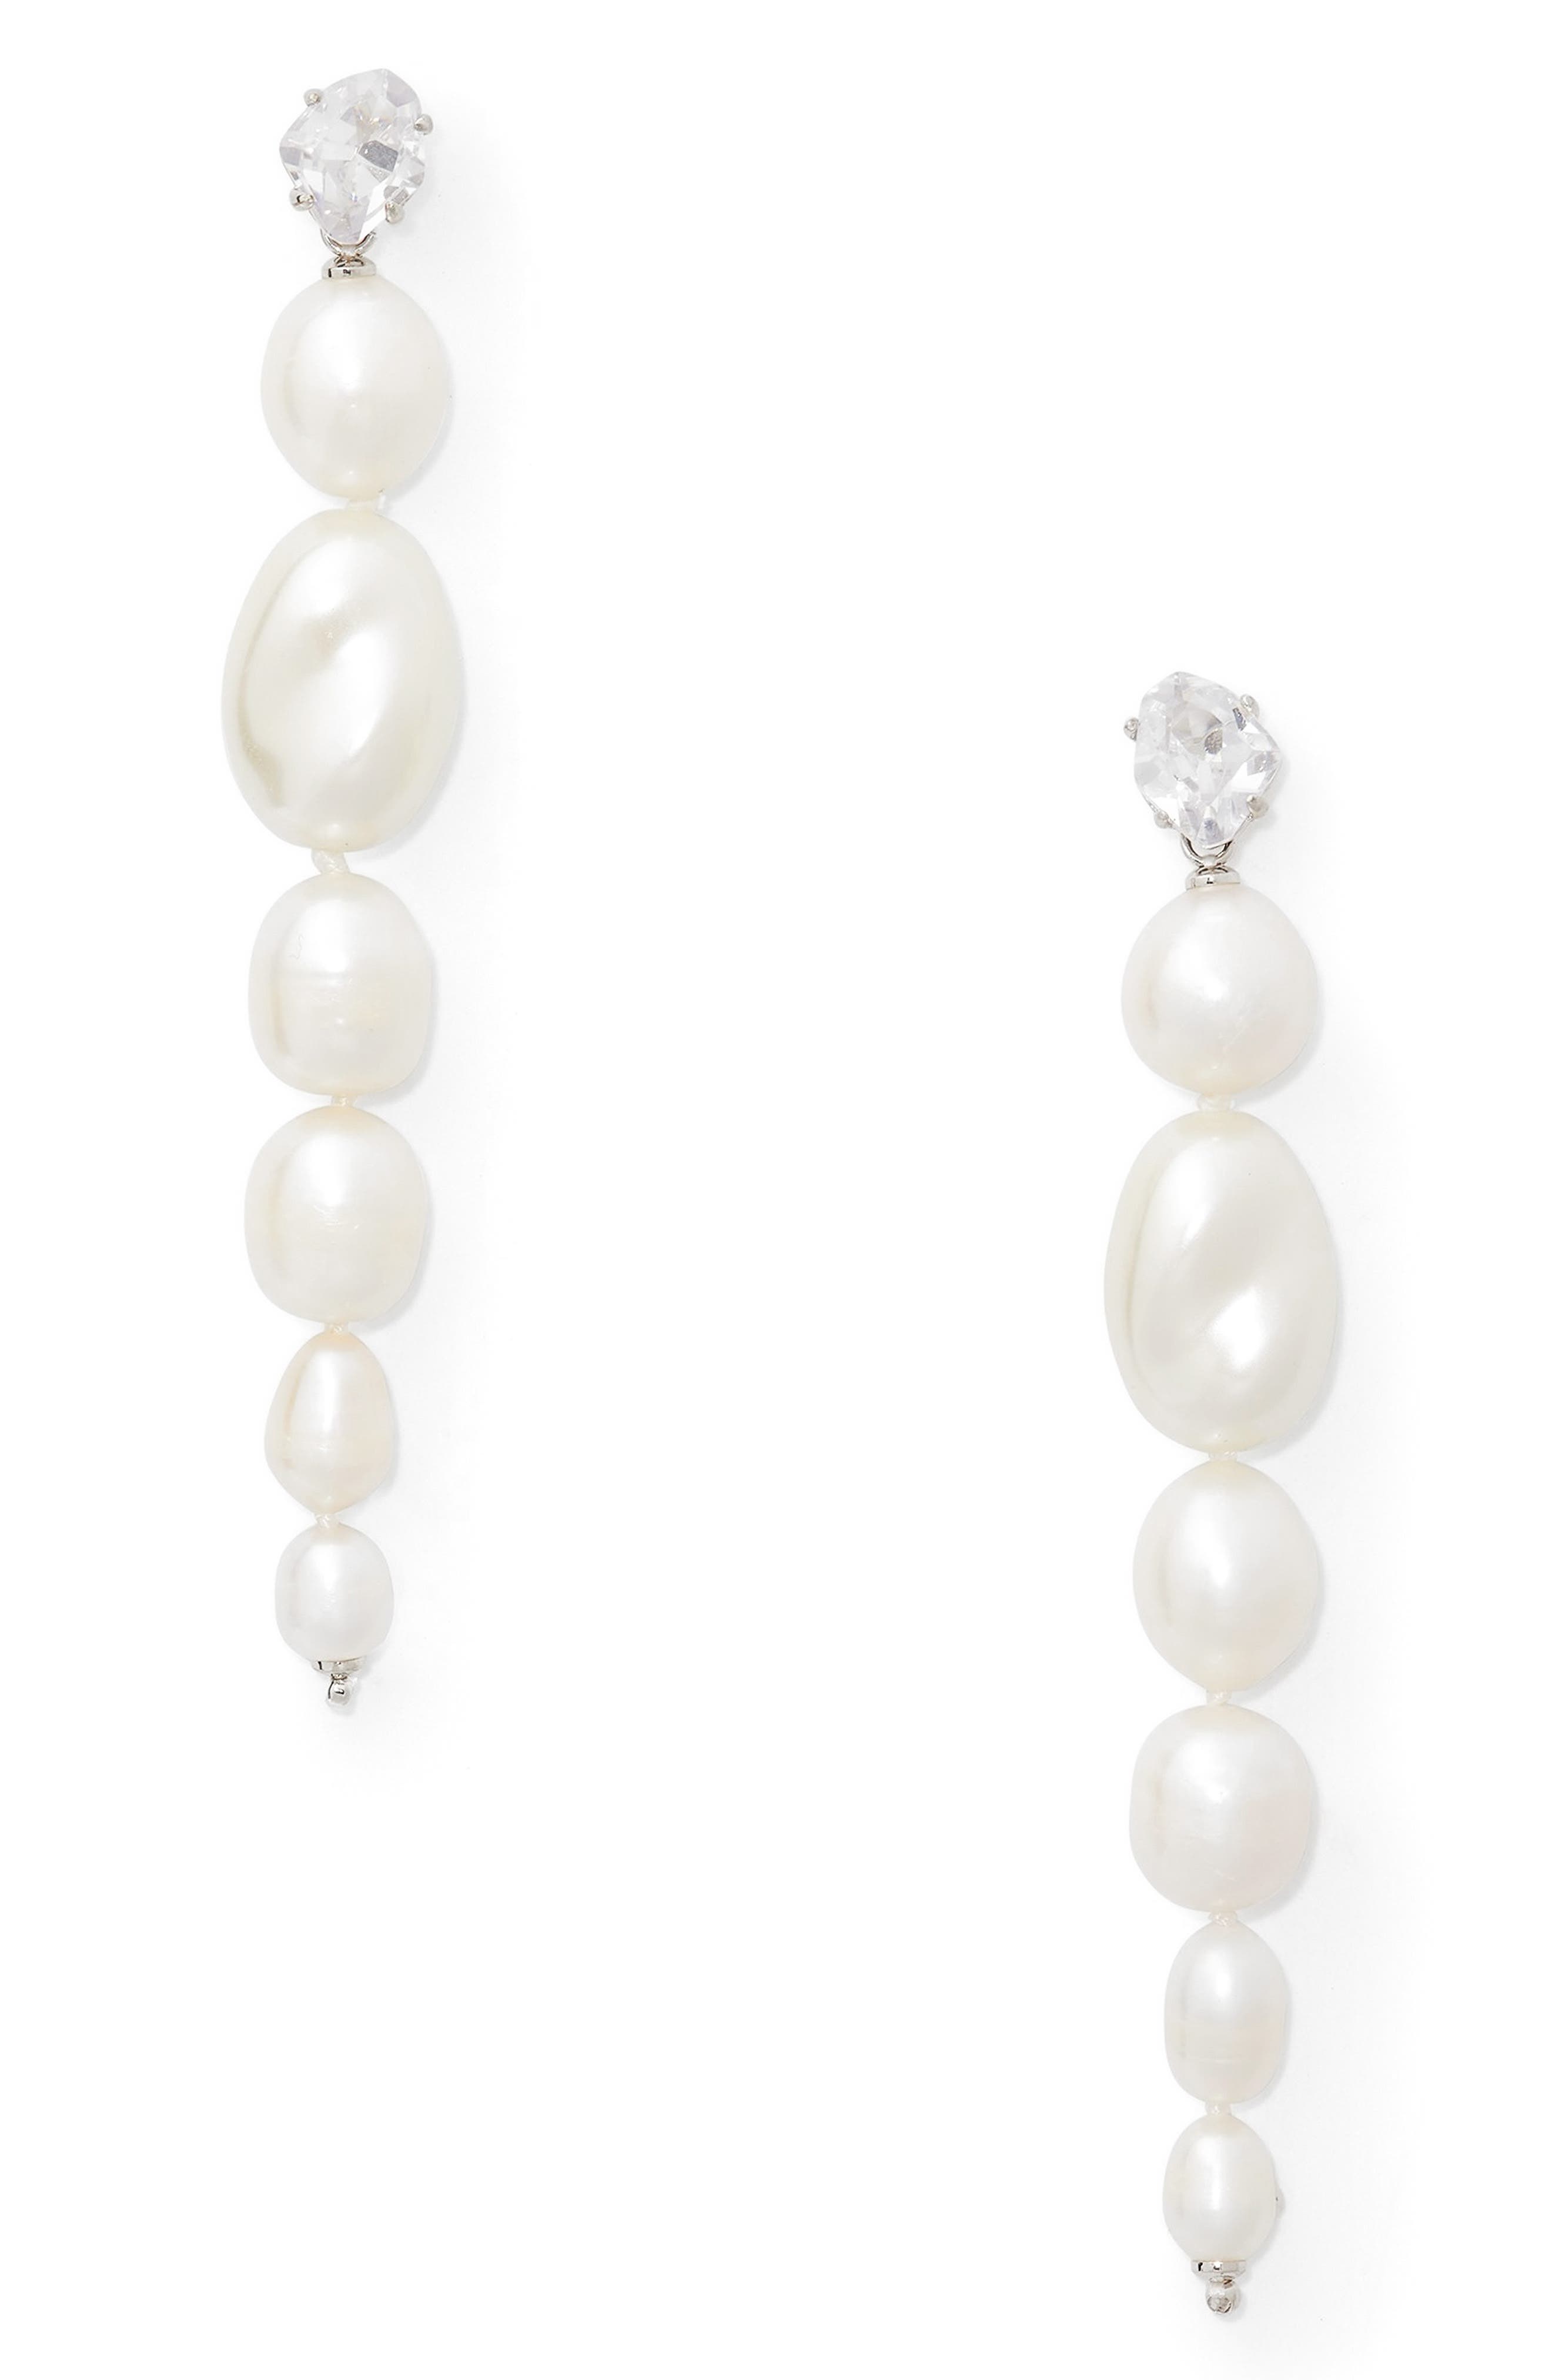 Daesar Gold Plated Earrings Womens Stud Earrings White Rhinestone Earring Princess Round Pearl Earrings